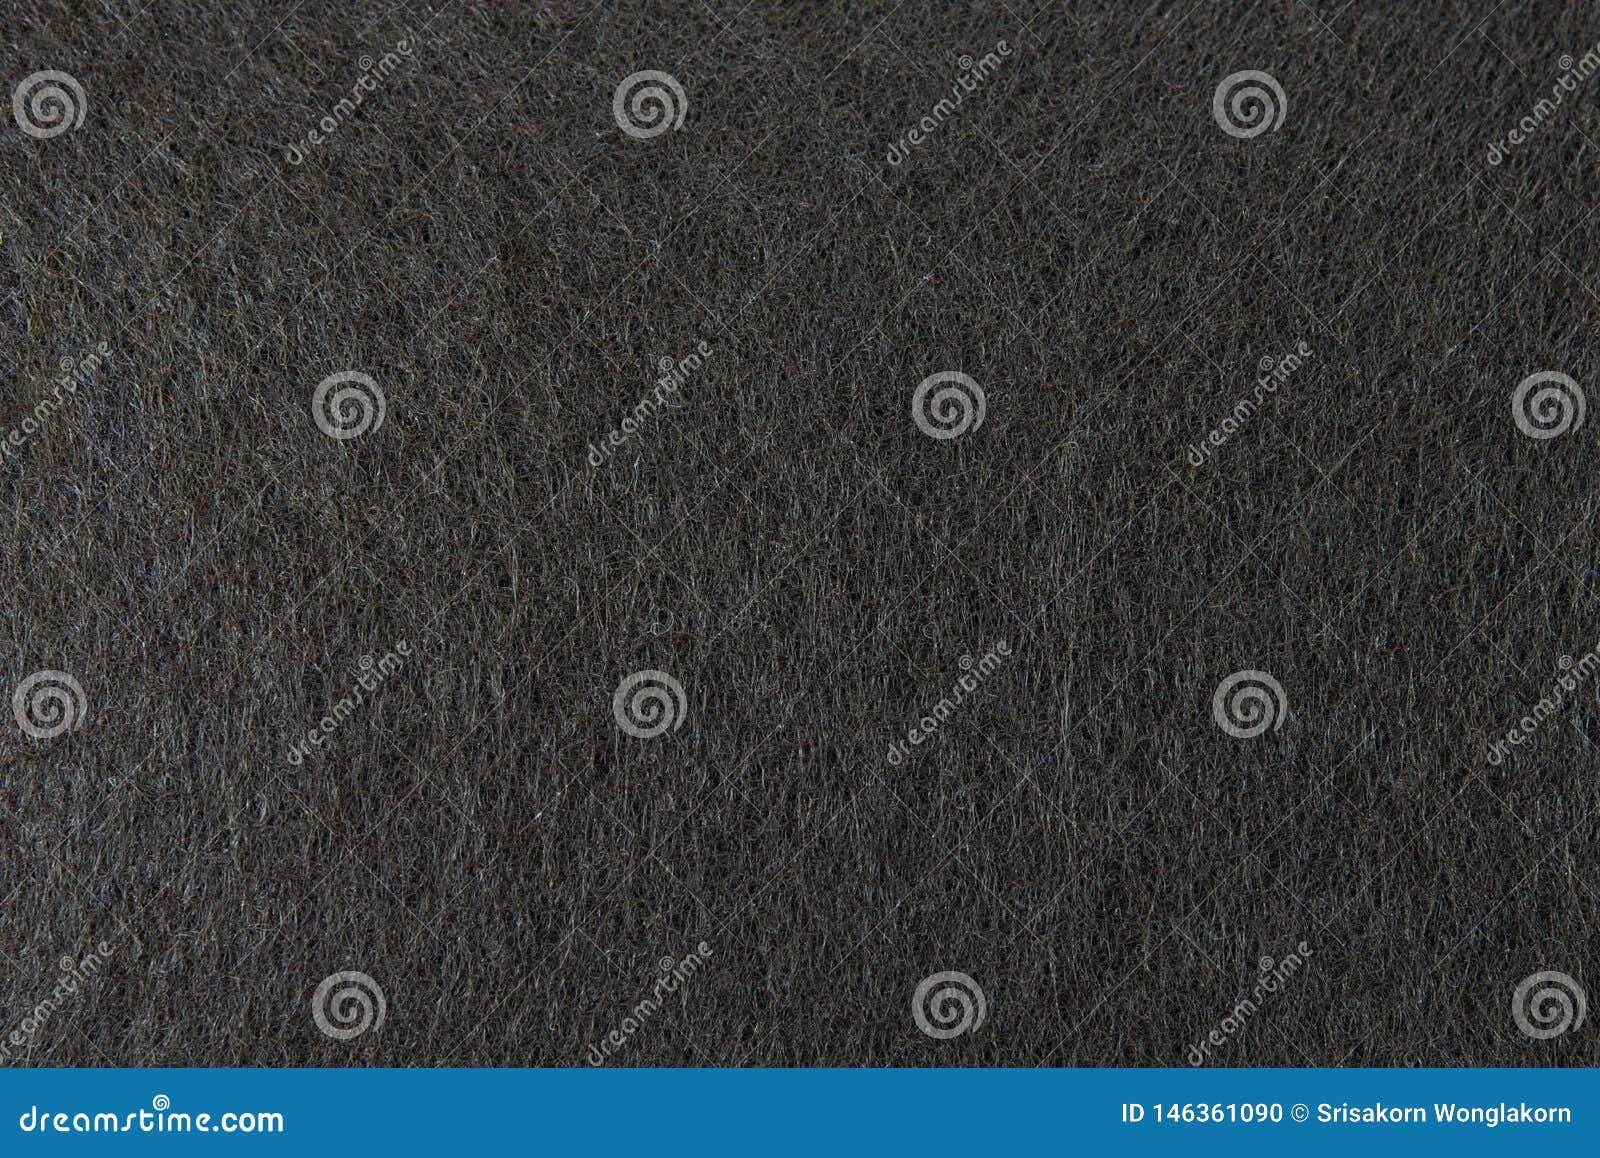 Black Polyester Smooth Fabric Closeup. Stock Photo - Image of drapery ...